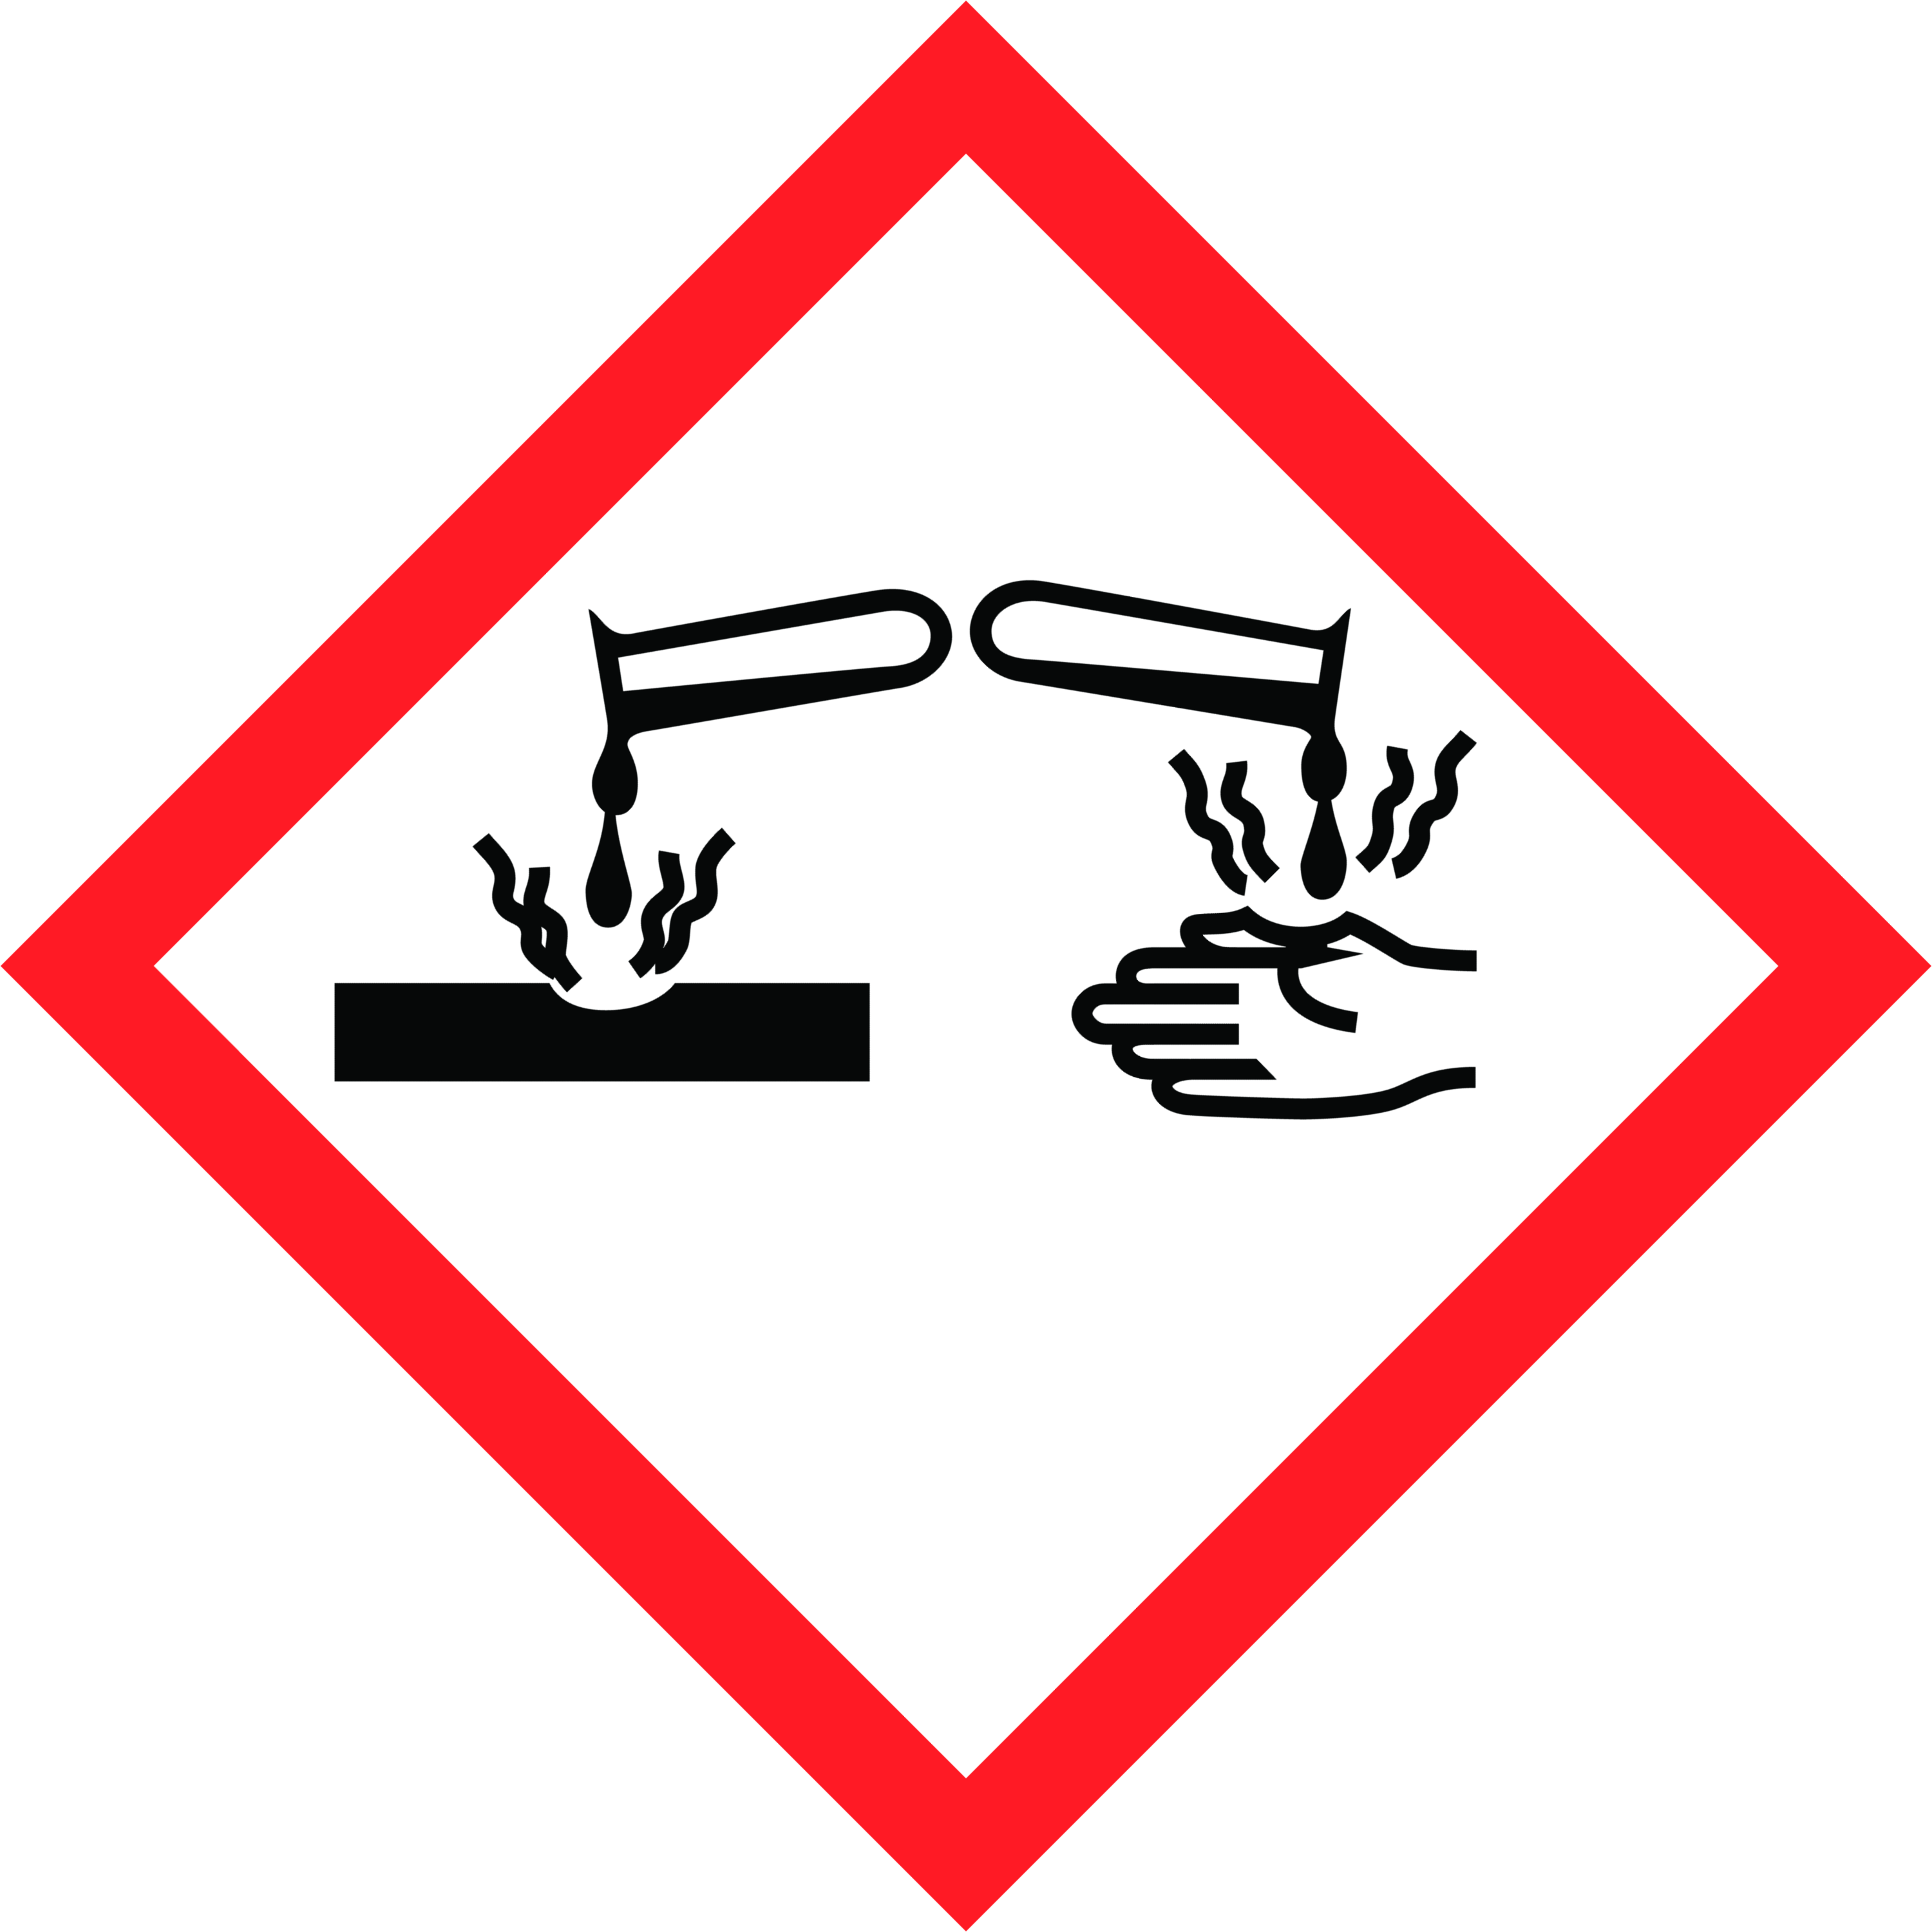 Safety Image